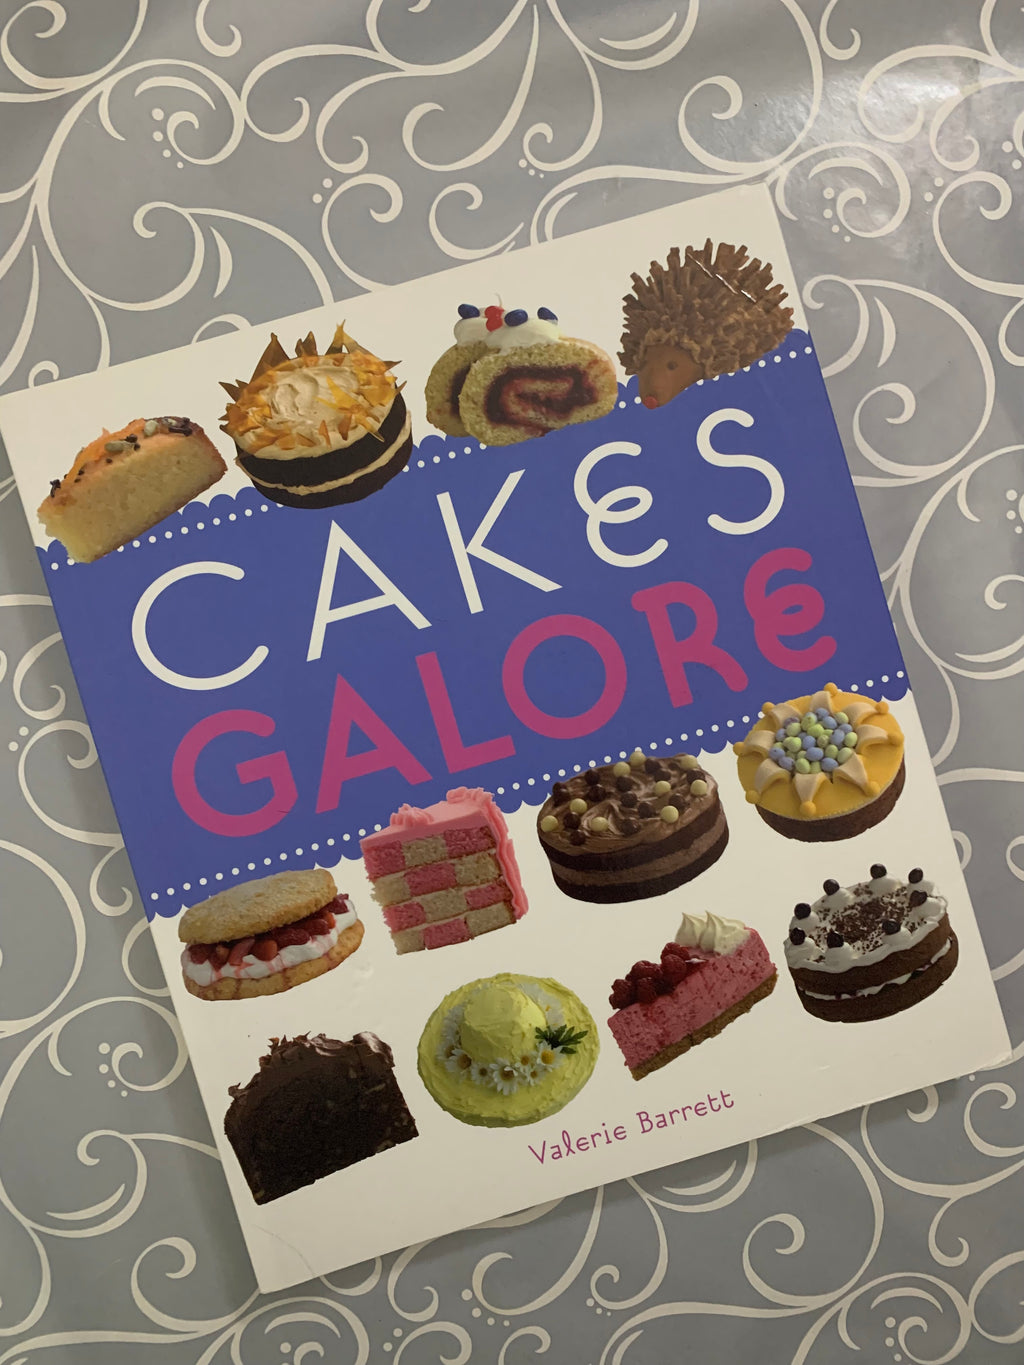 Cakes Galore- By Valerie Barrett